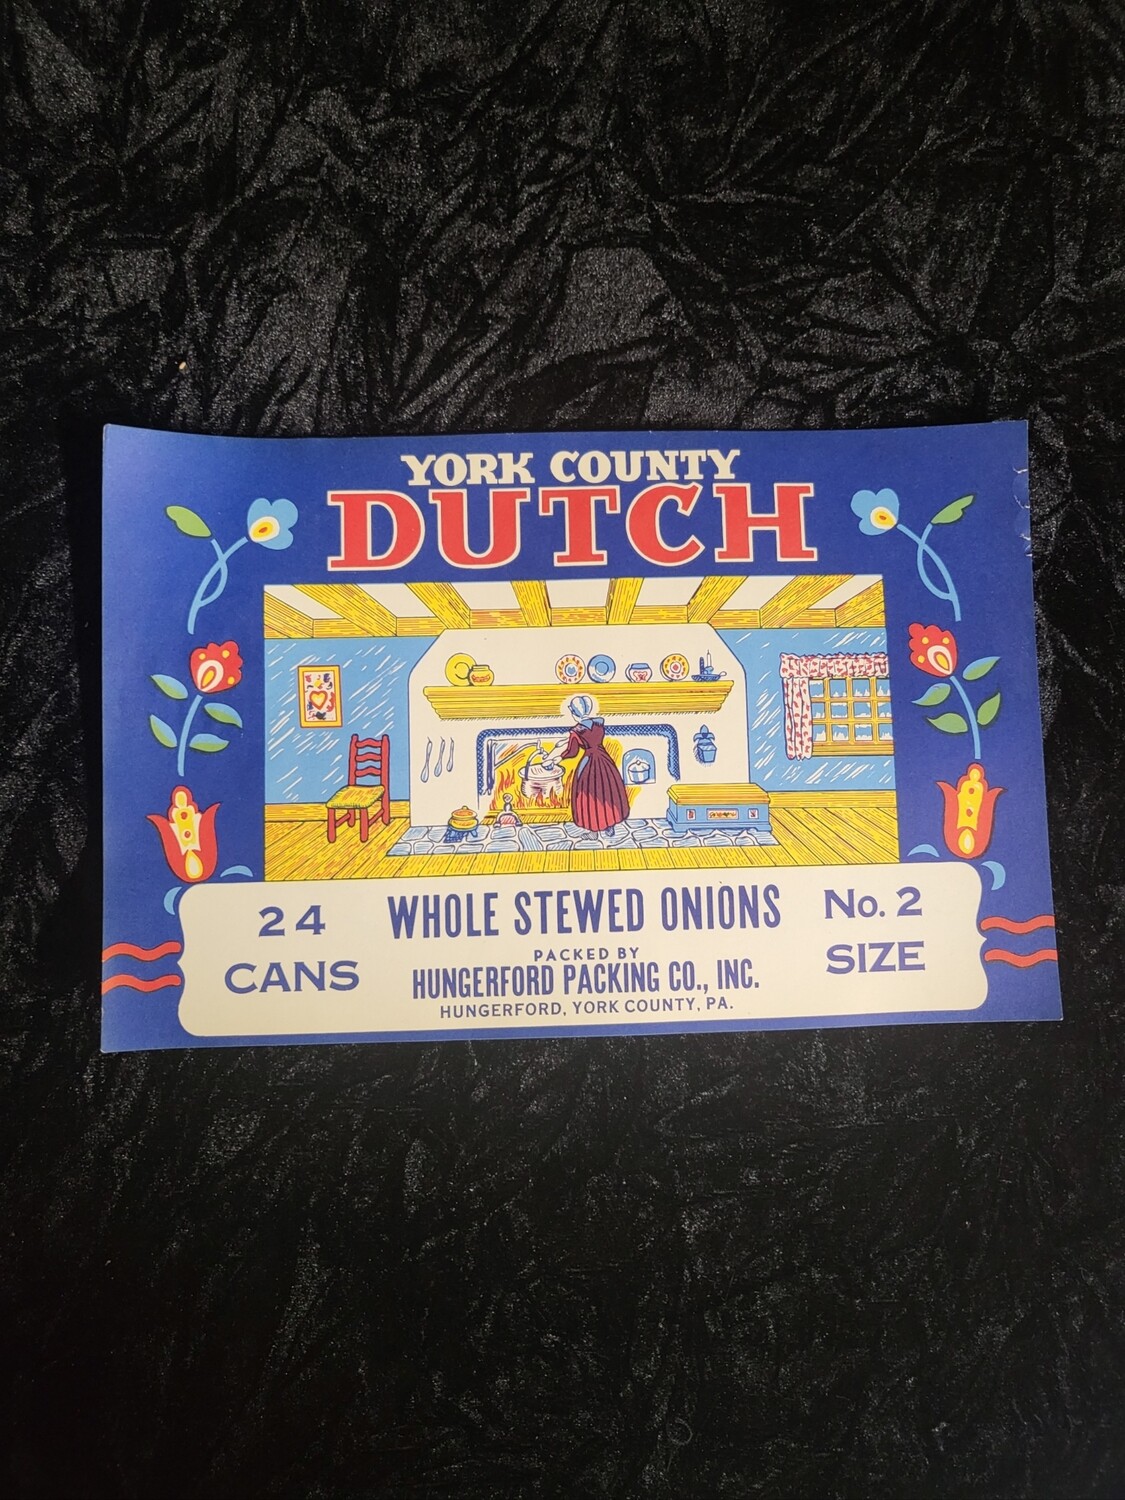 Vintage Pa Dutch can label